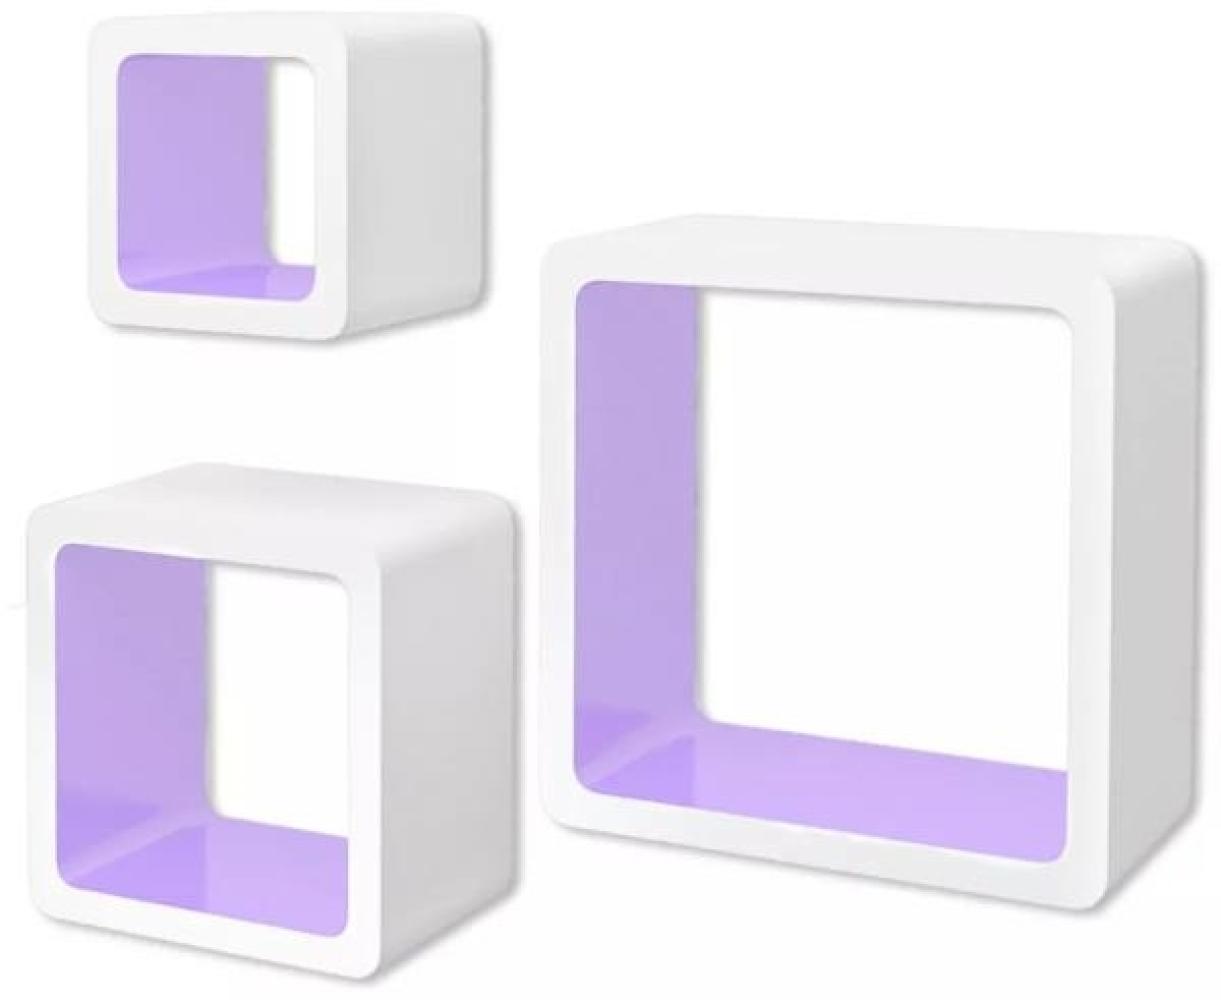 3er Set MDF Hängeregal Cube Regal Regalwürfel f. Bücher/DVD, weiß-lila Bild 1